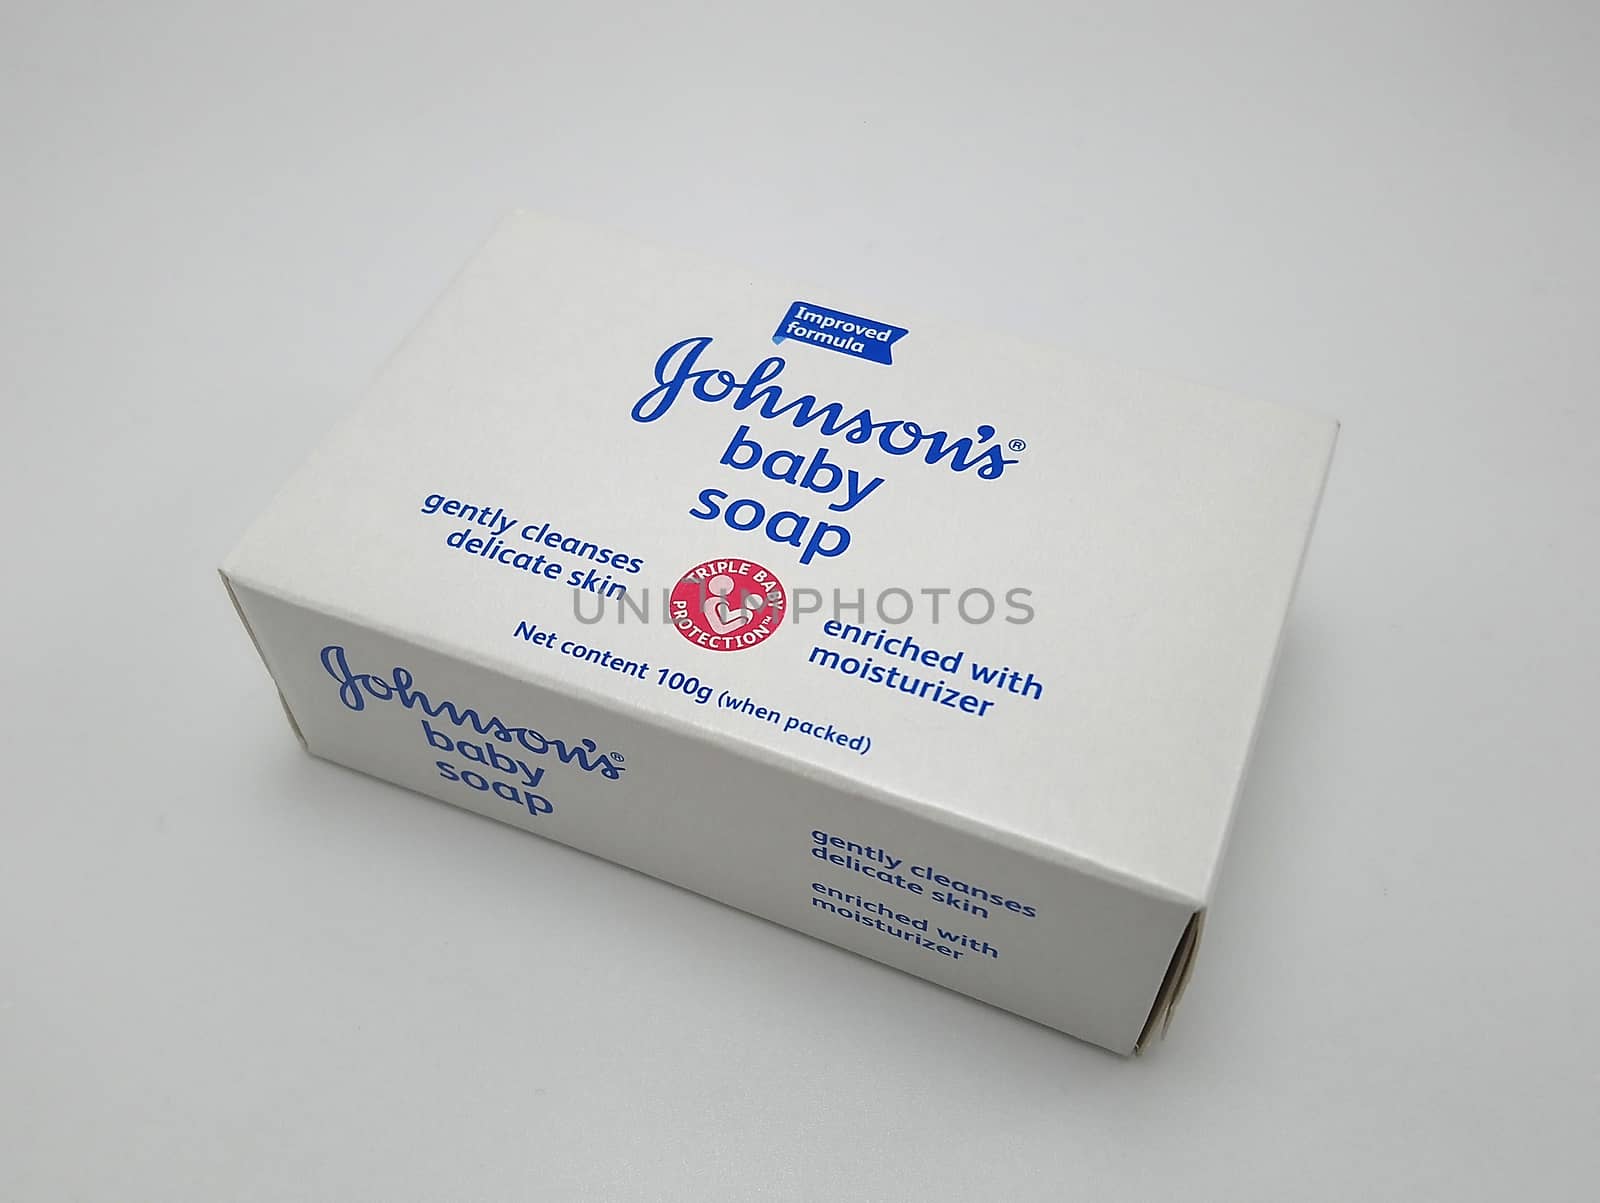 Johnsons baby soap box in Manila, Philippines by imwaltersy